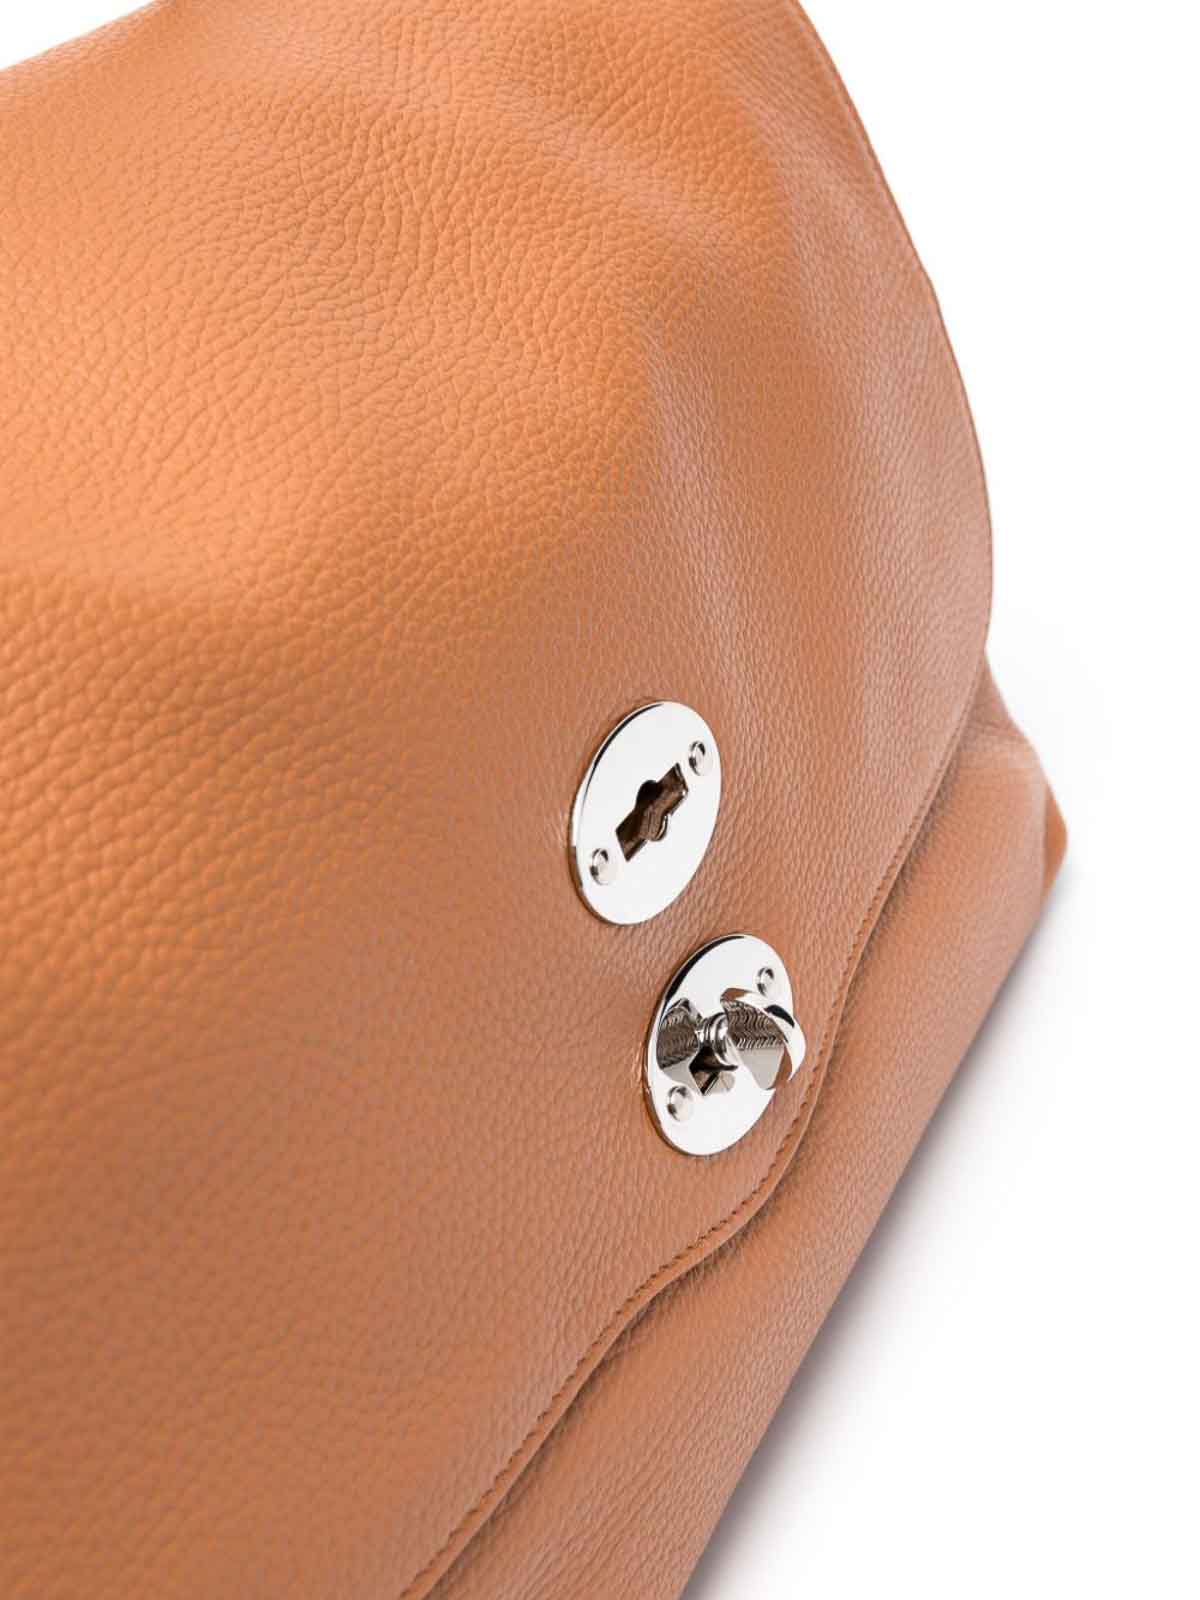 Shop Zanellato Postina M Daily Leather Handbag In Marrón